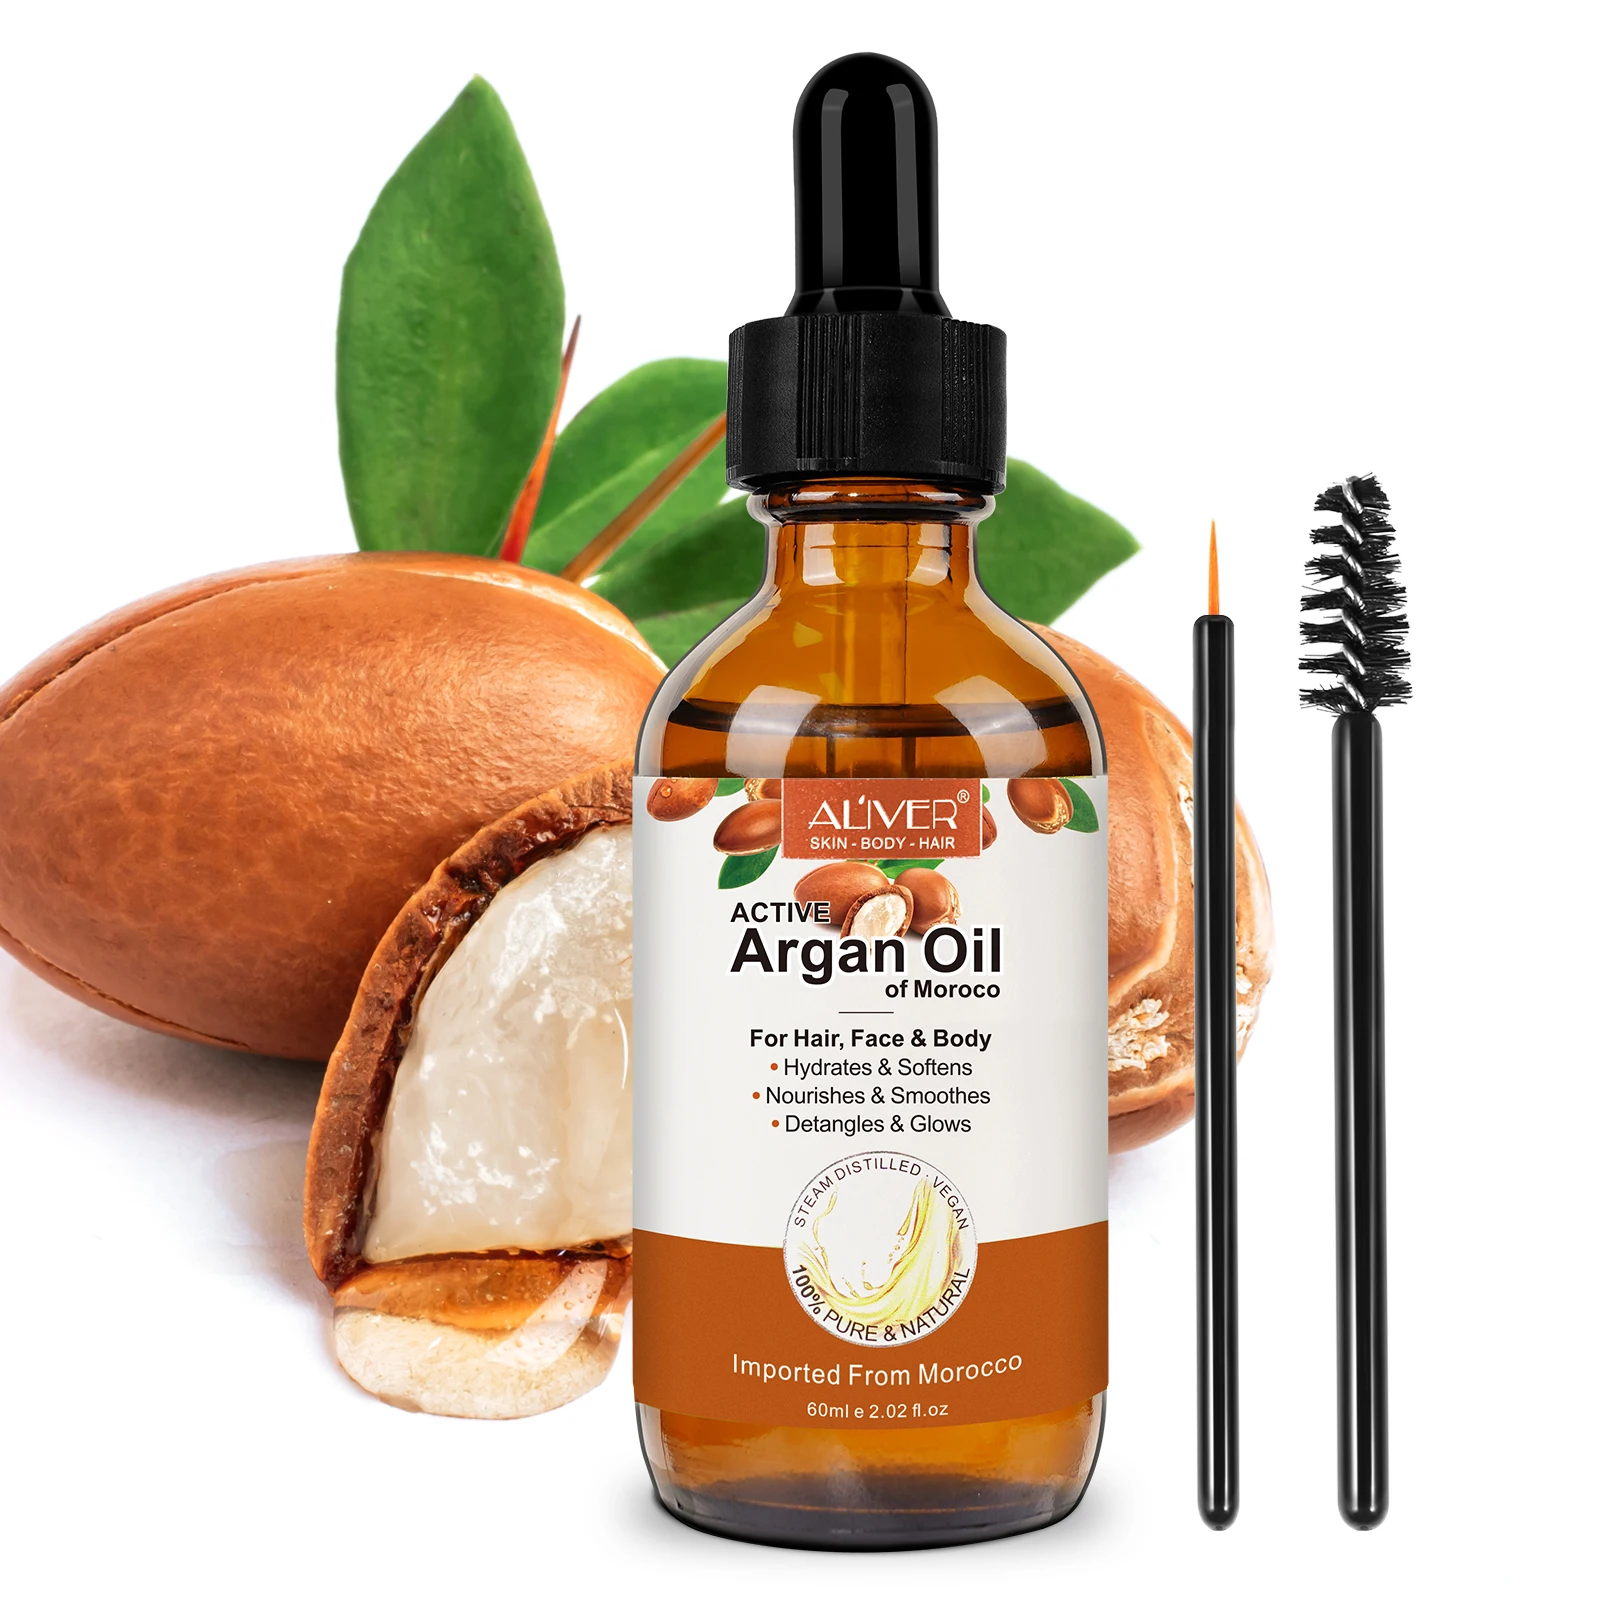 

Oem Private Label Organic Strenthening Repair Hair Treatment Extract Hair Growth Oil Argan Oil